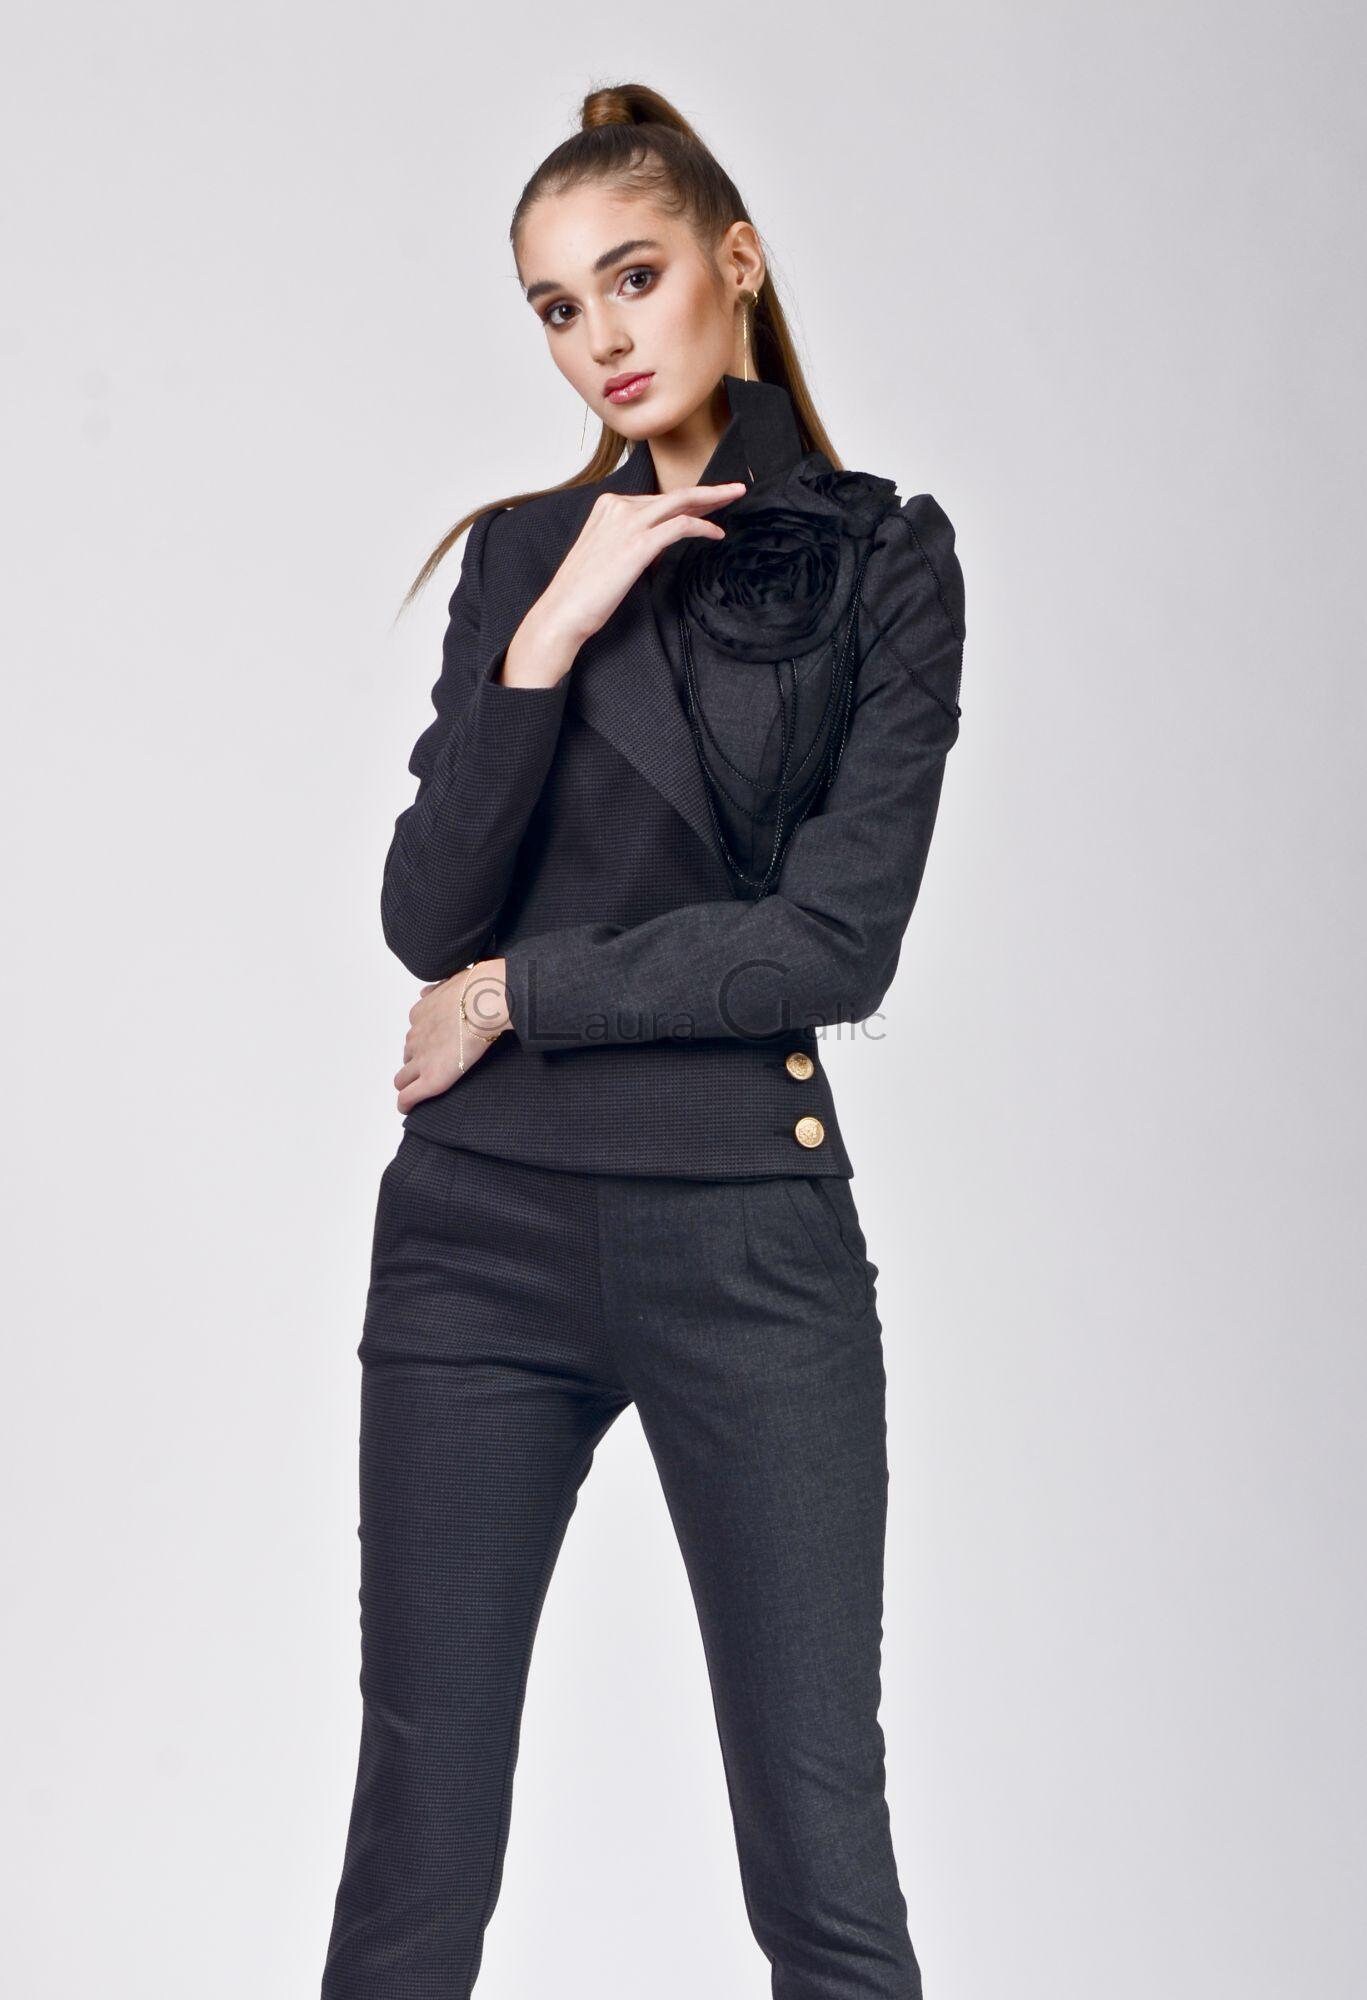 Tailored Blazer Women's Jacket Office Suit Personalized | Etsy